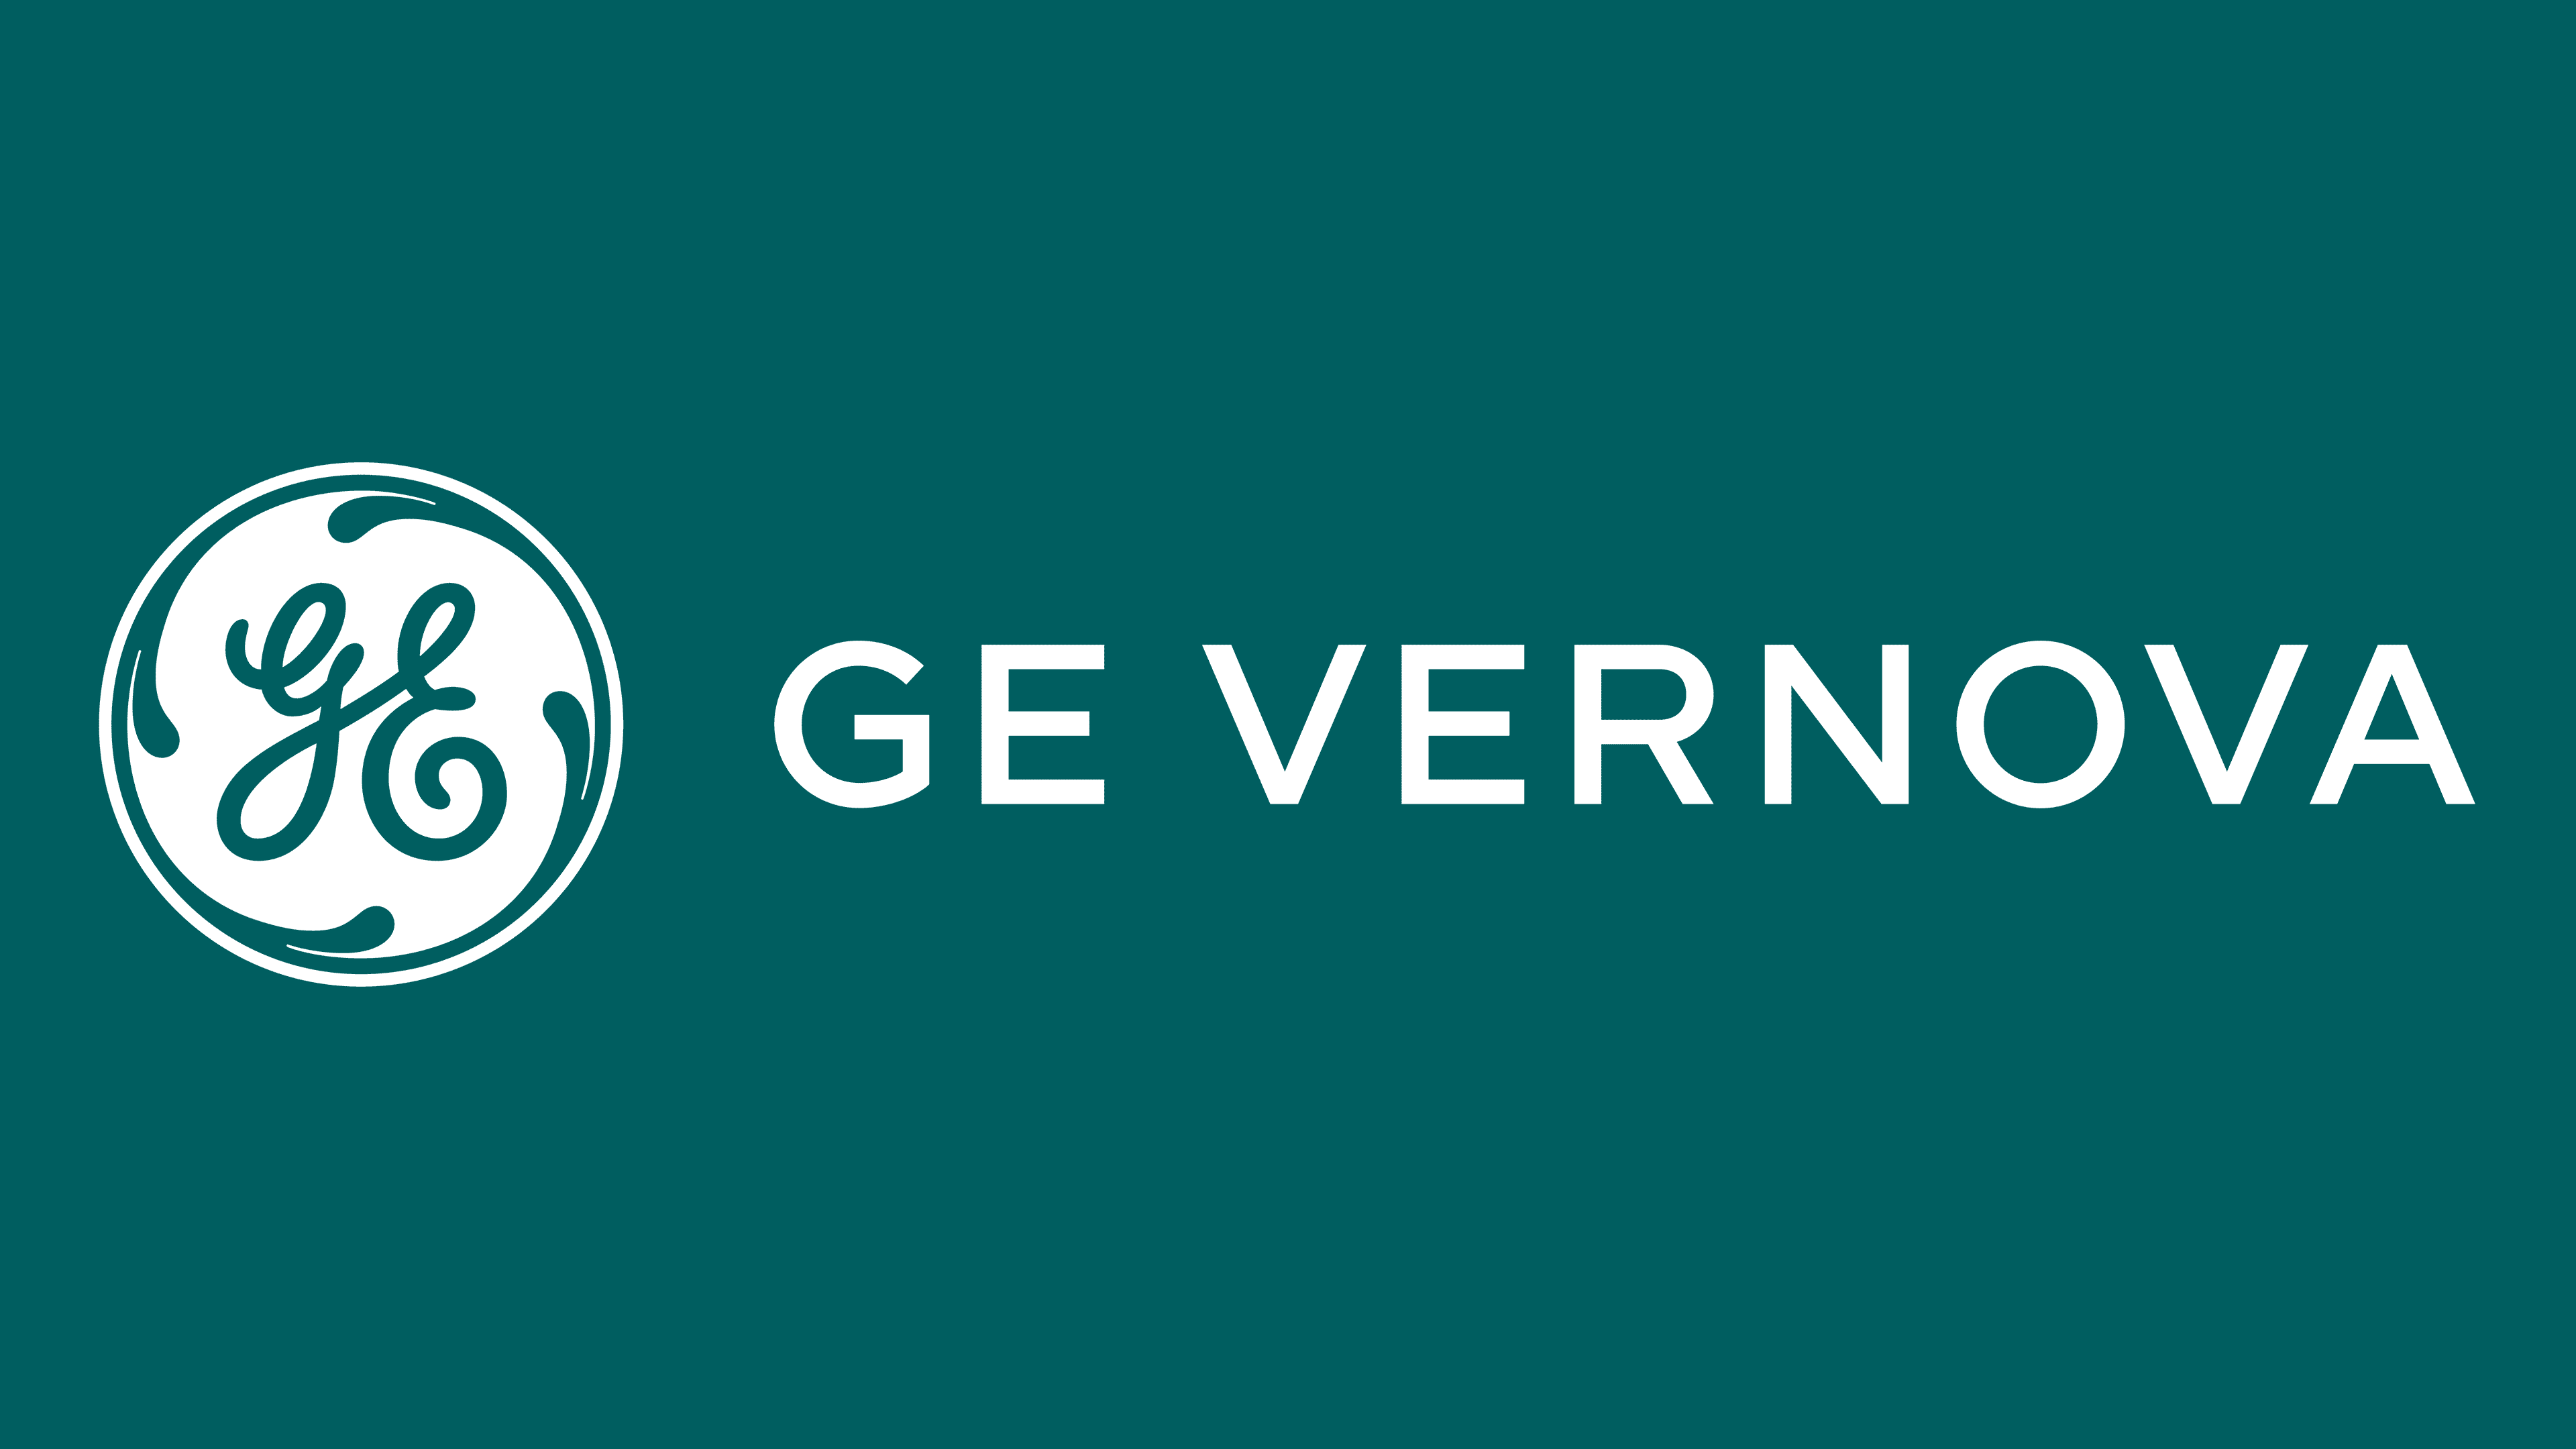 GE Vernova Logo, symbol, meaning, history, PNG, brand